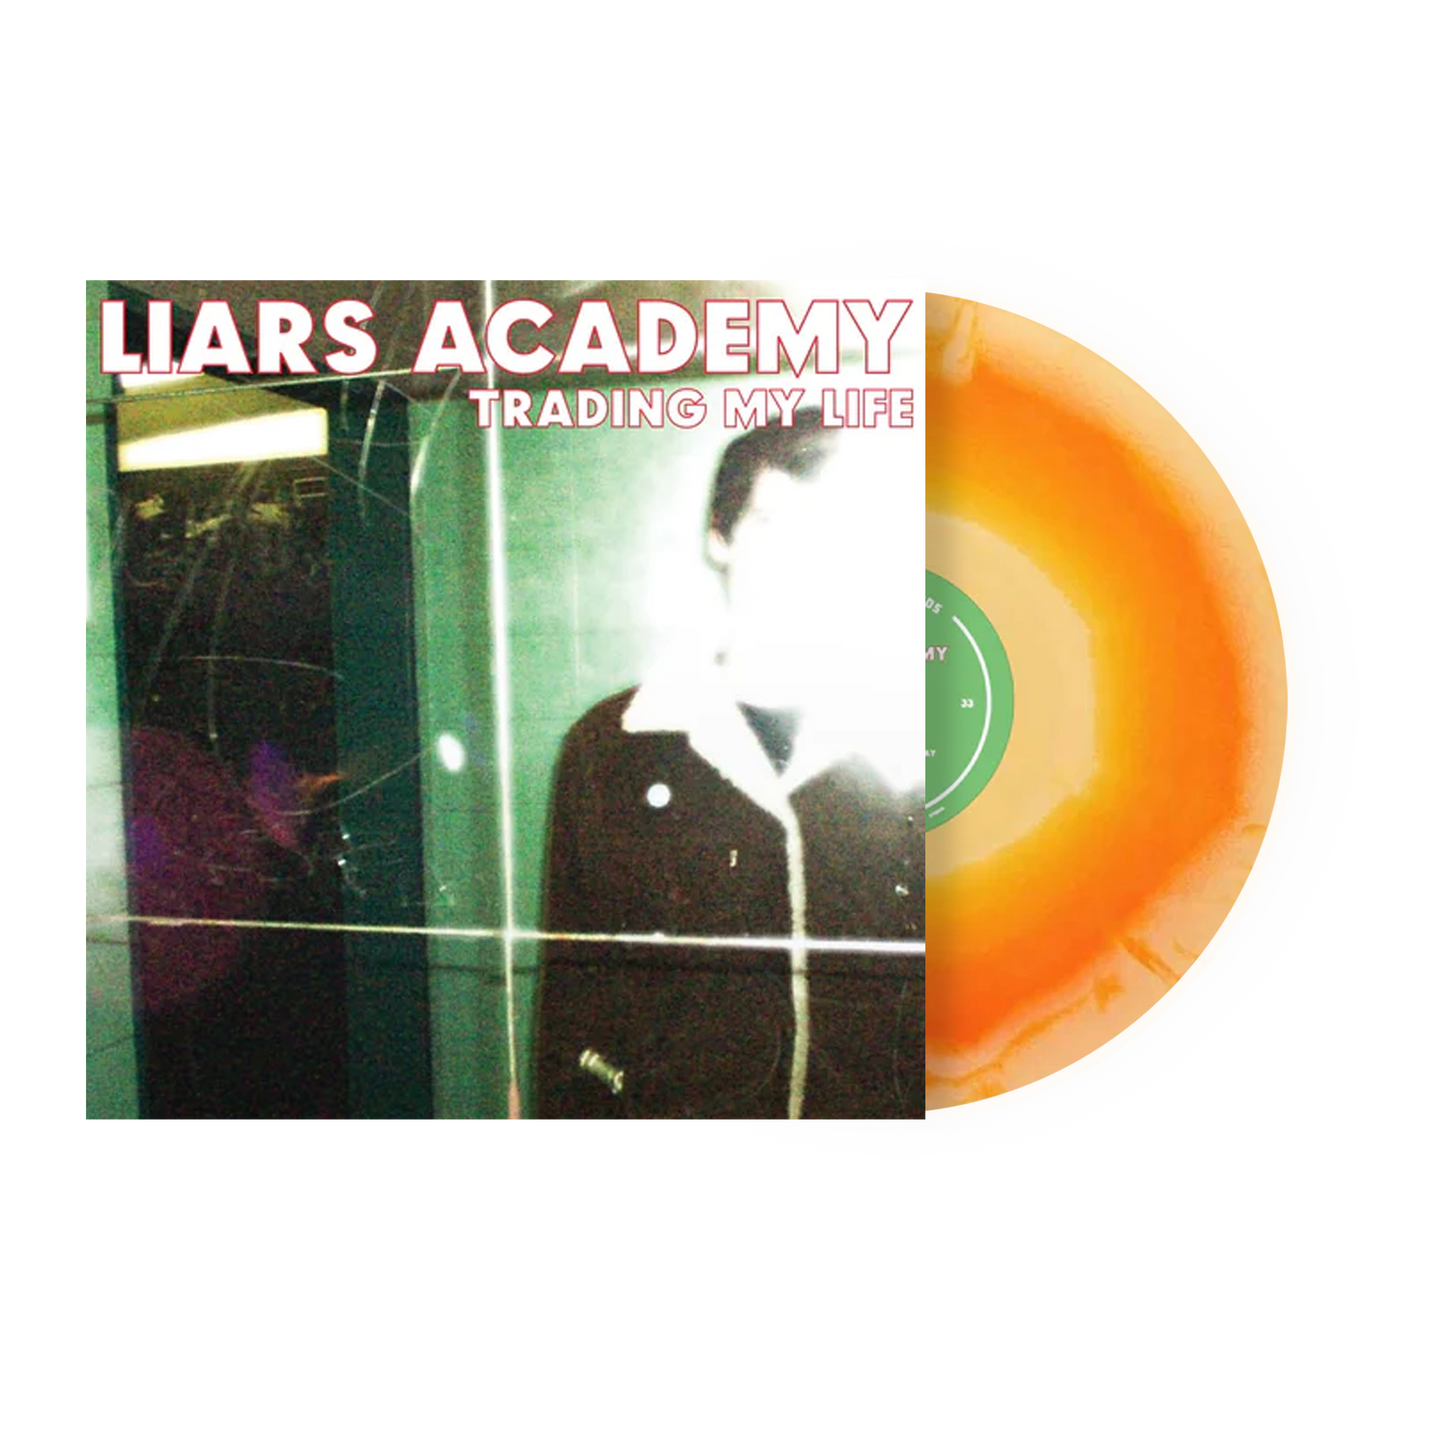 Liars Academy "Trading My Life" EP